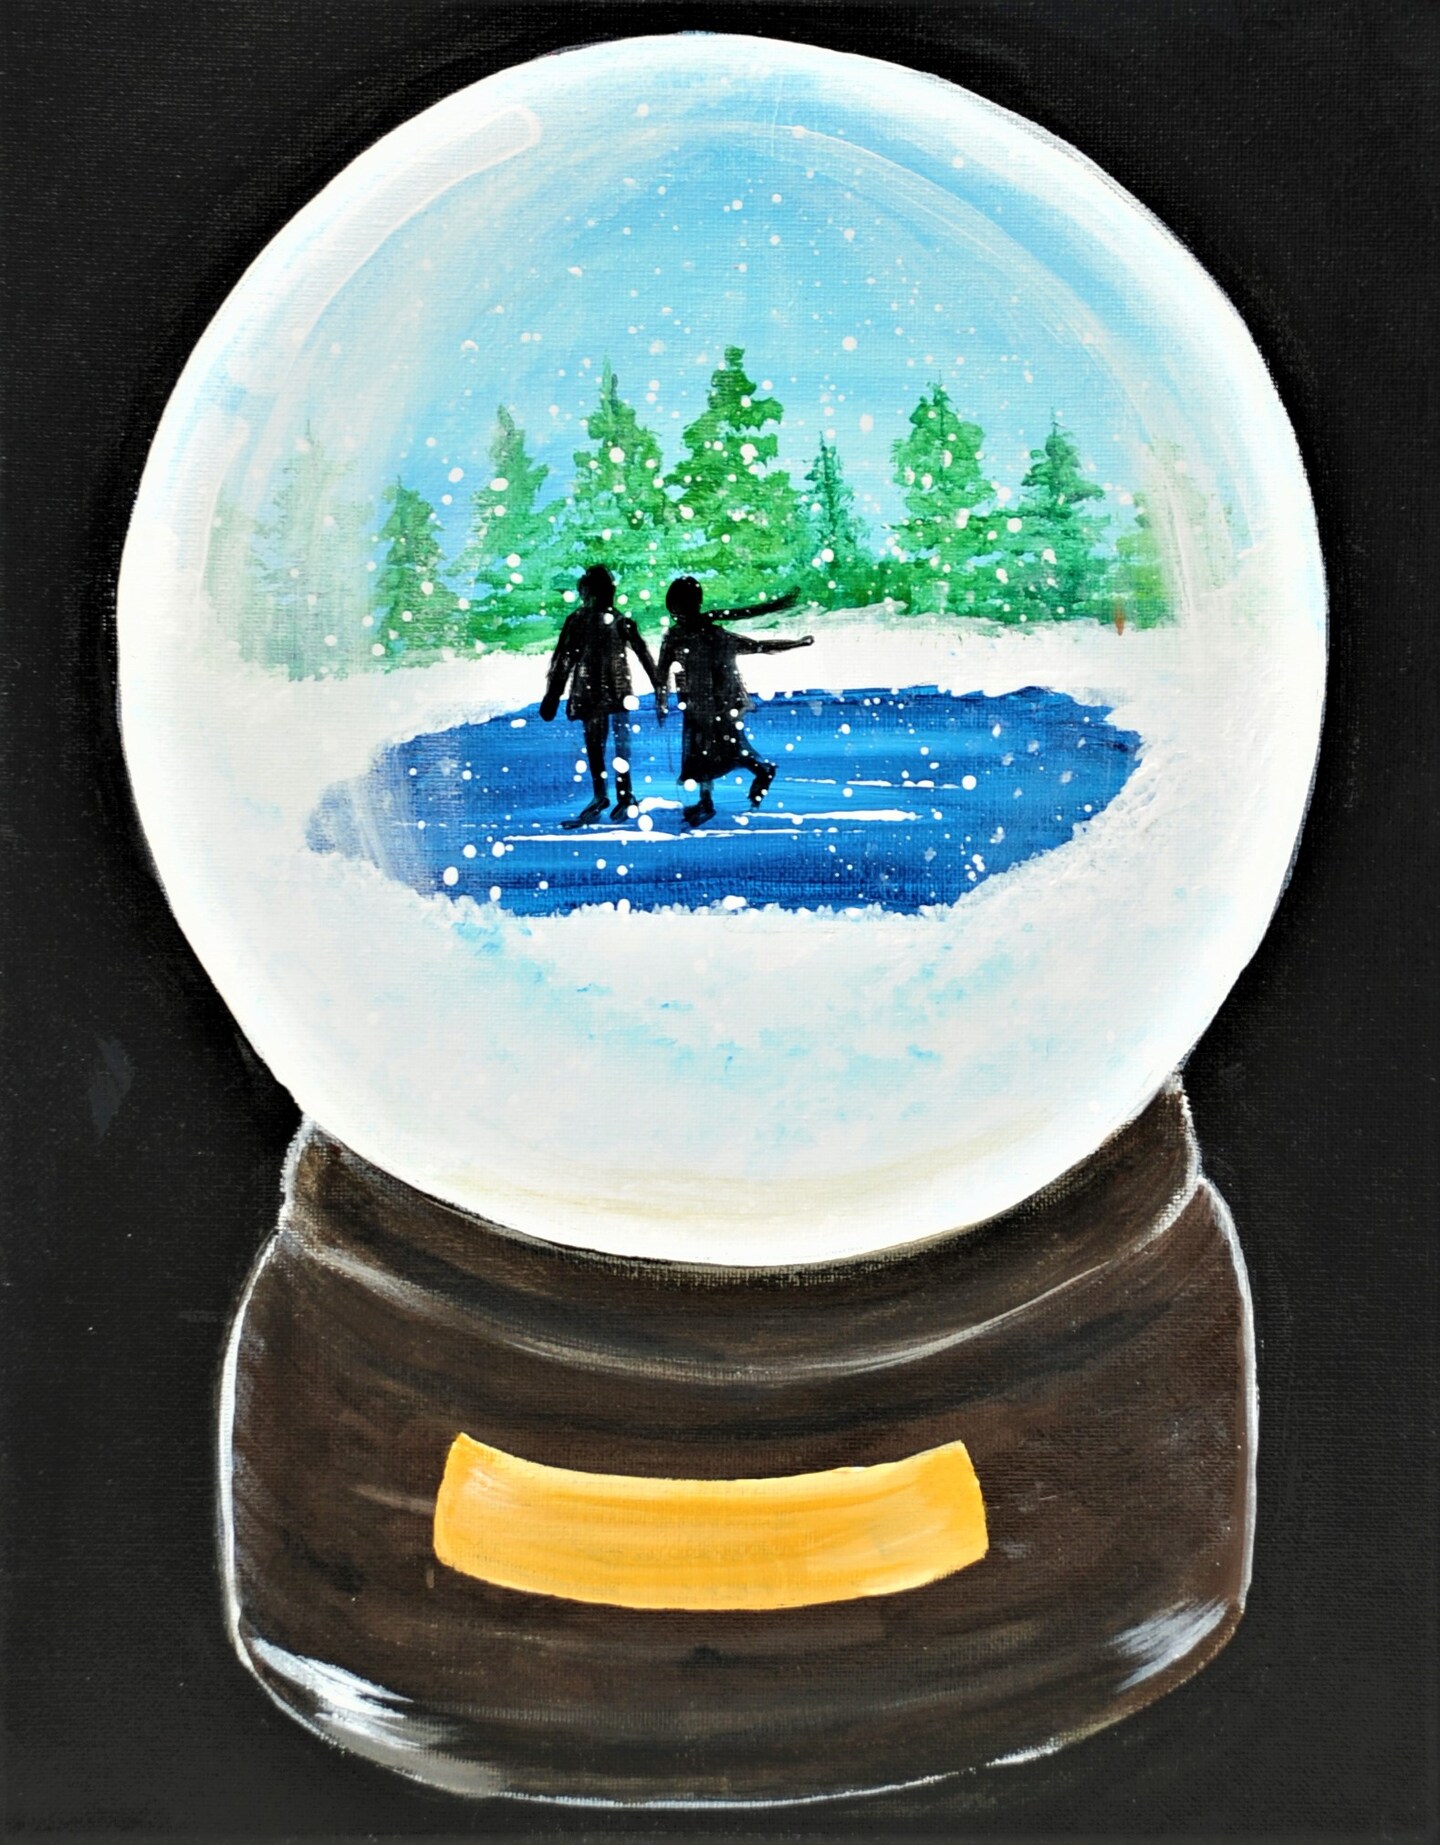 Paint Kit - Iceskaters' Dream Snowglobe Acrylic Painting Kit